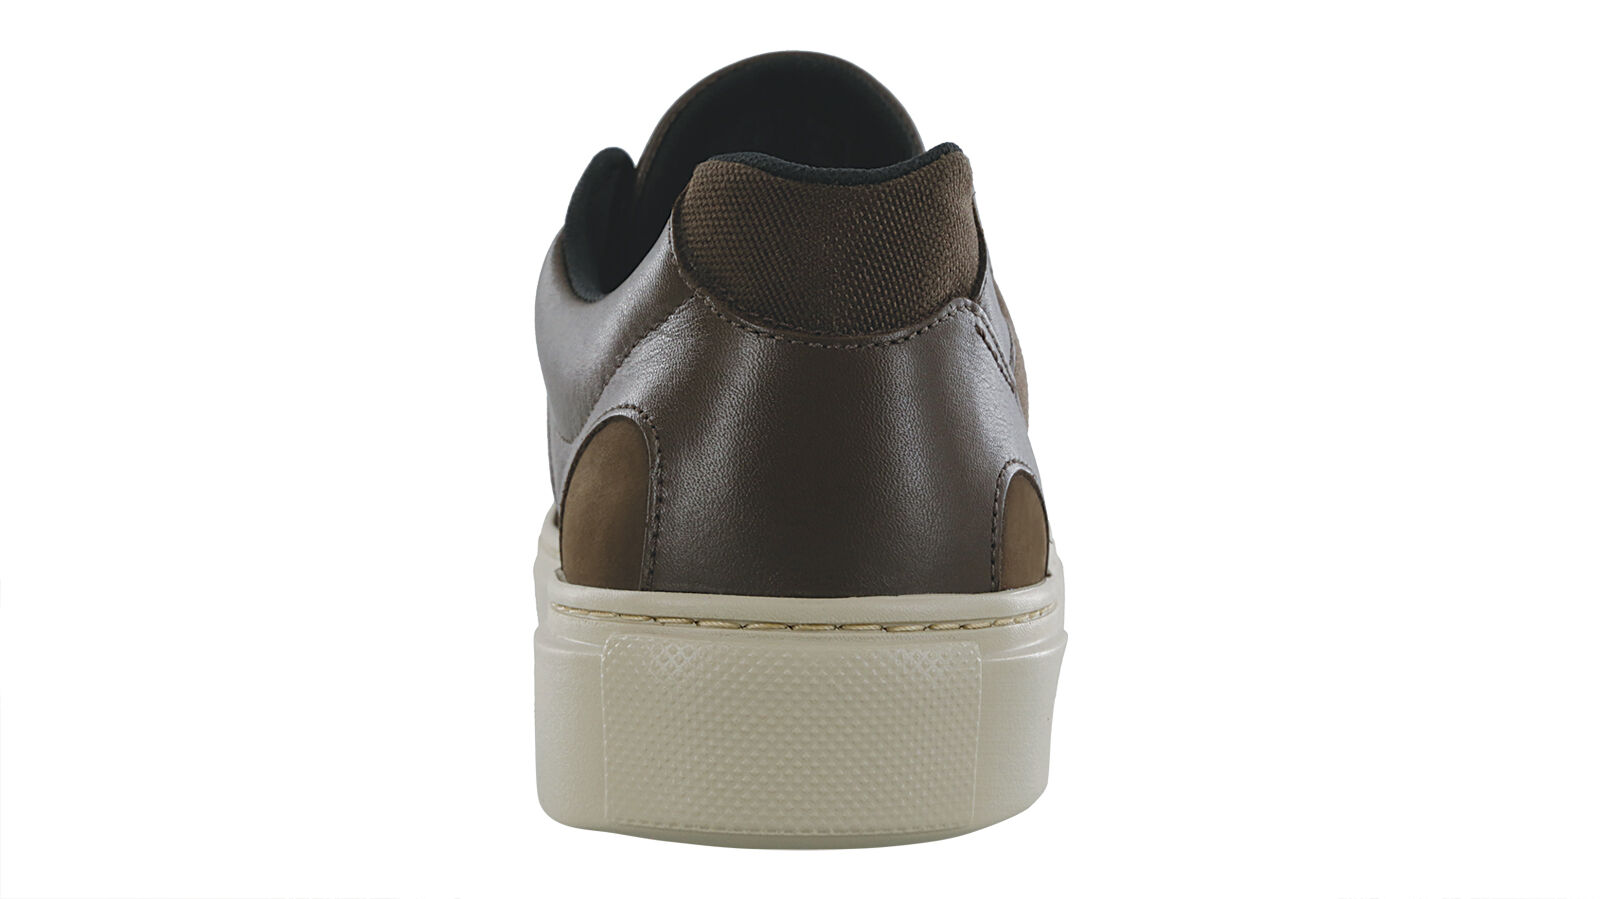 Buy Aldo HOLMES201 Dark Brown Men Leather Casual Shoe at Amazon.in